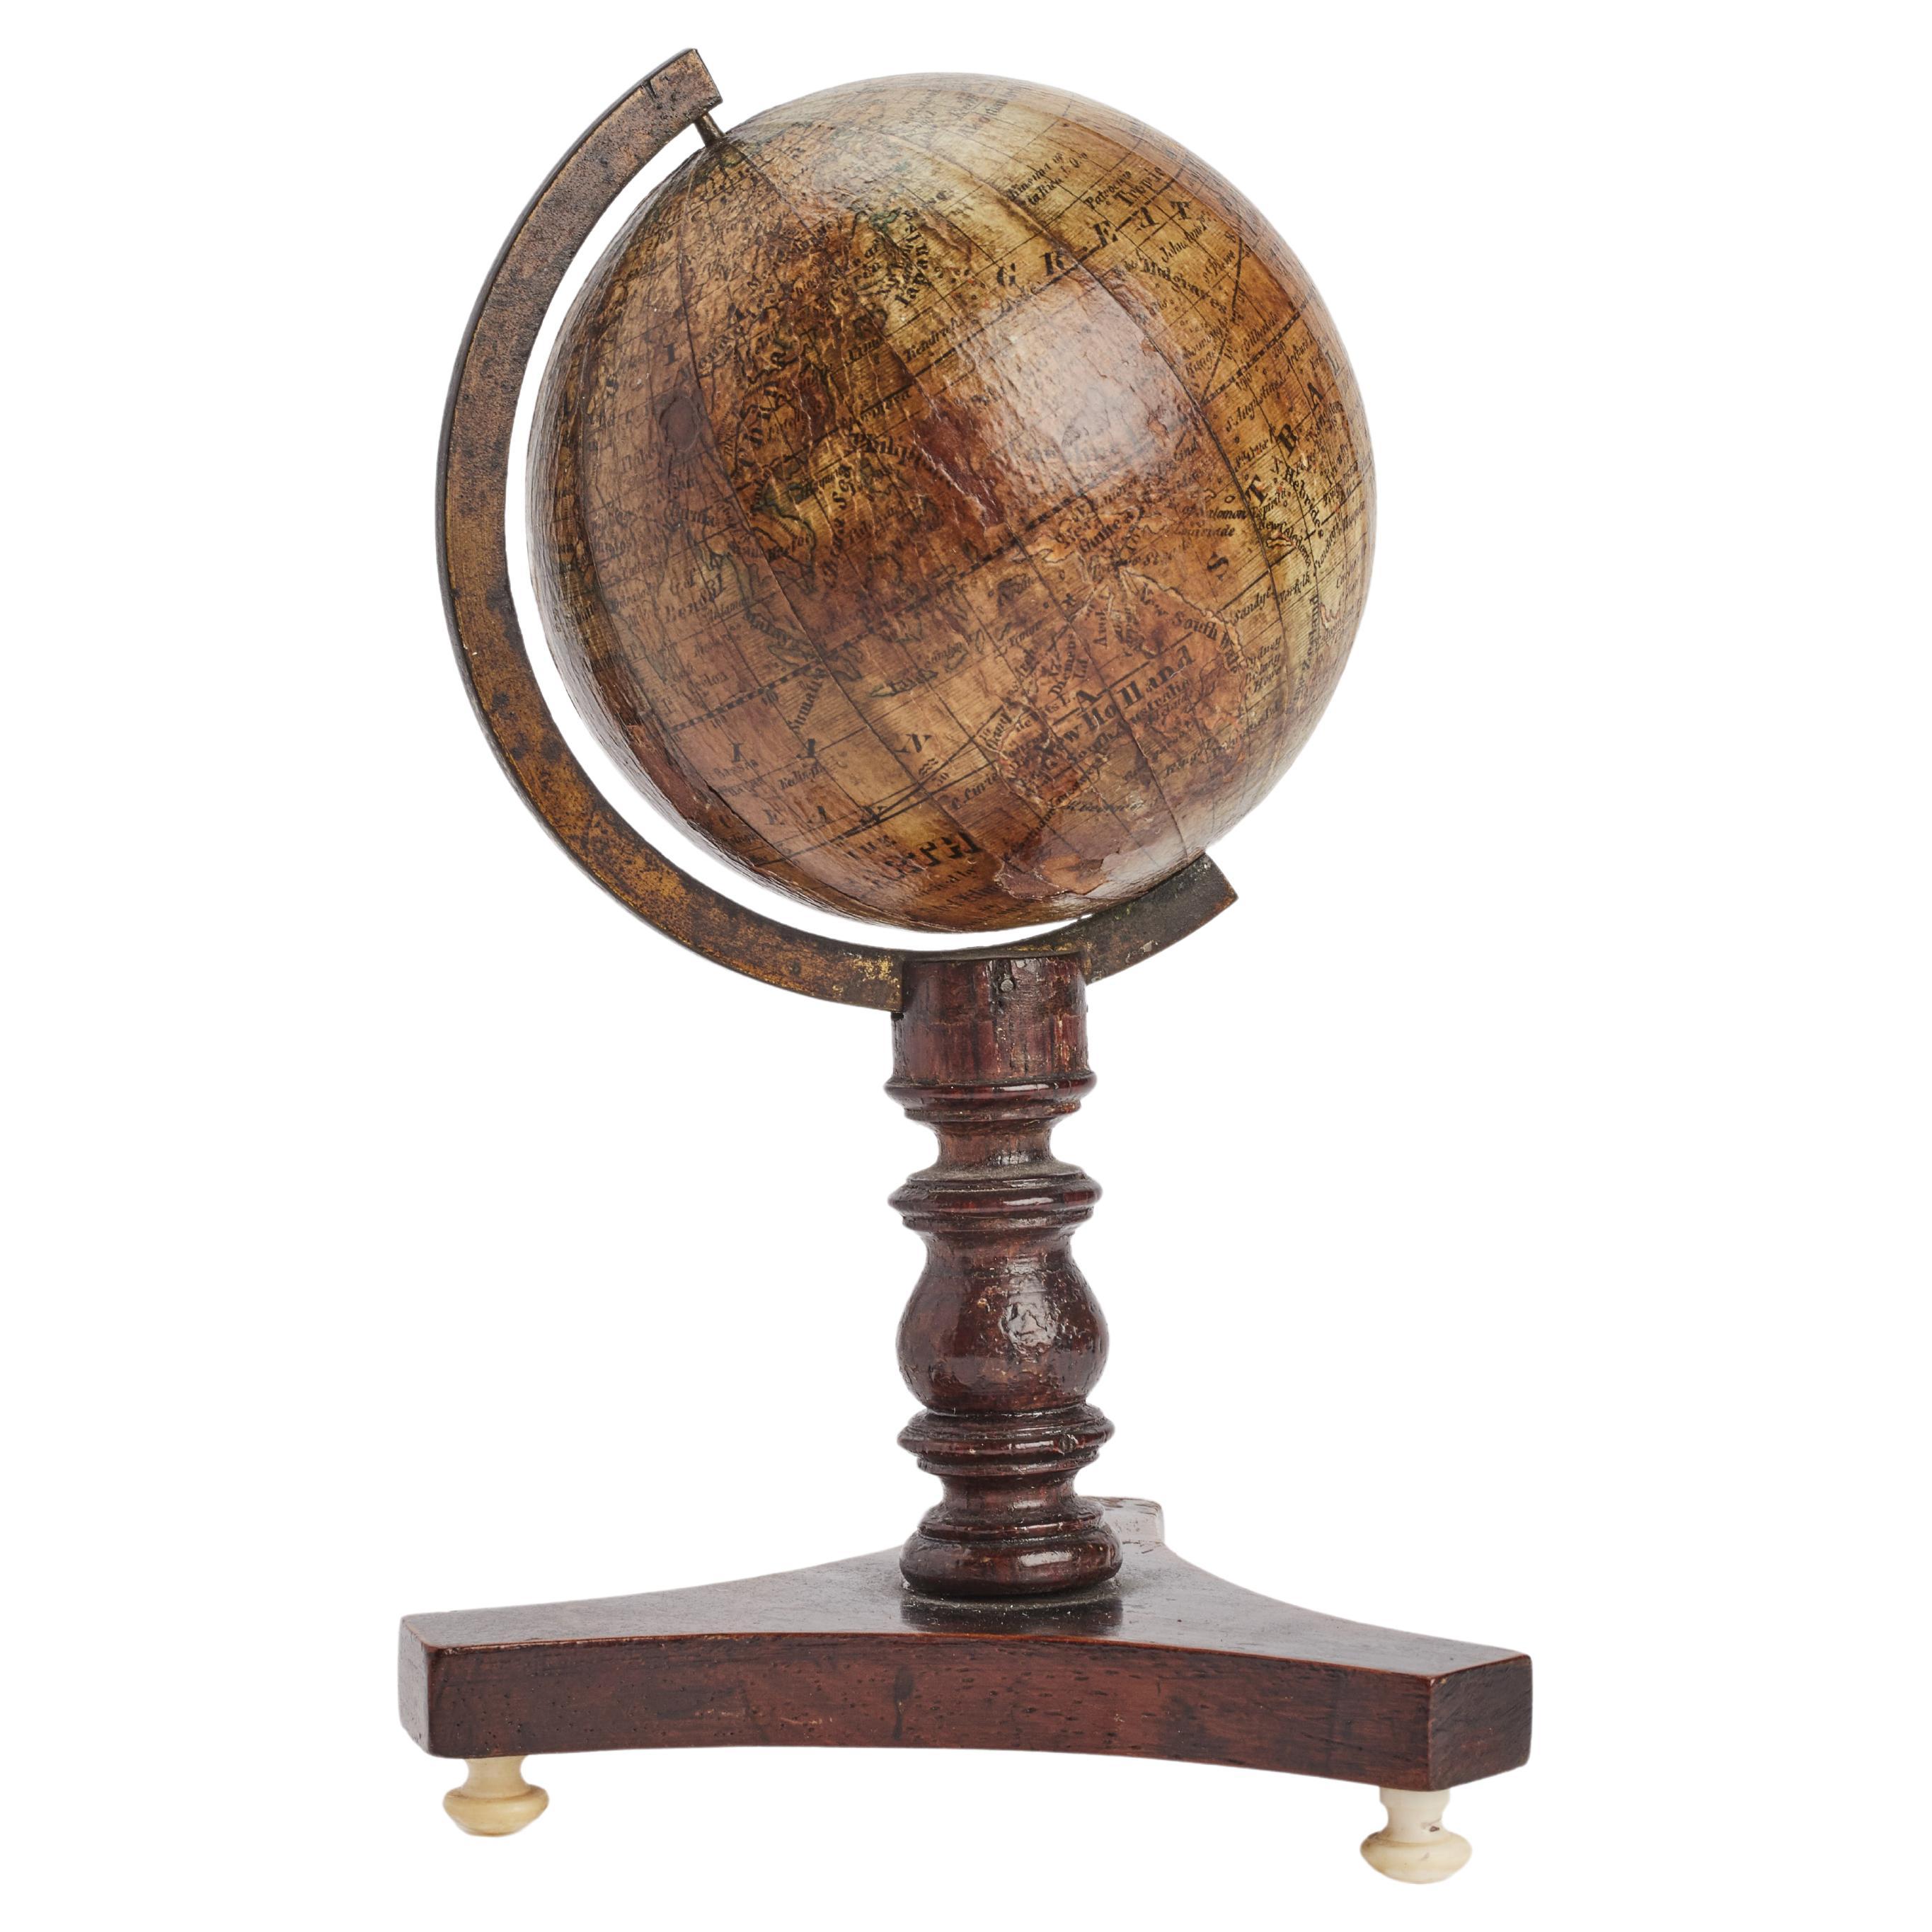 A traveling small globe signed Klinger, Nüremberg 1820. 